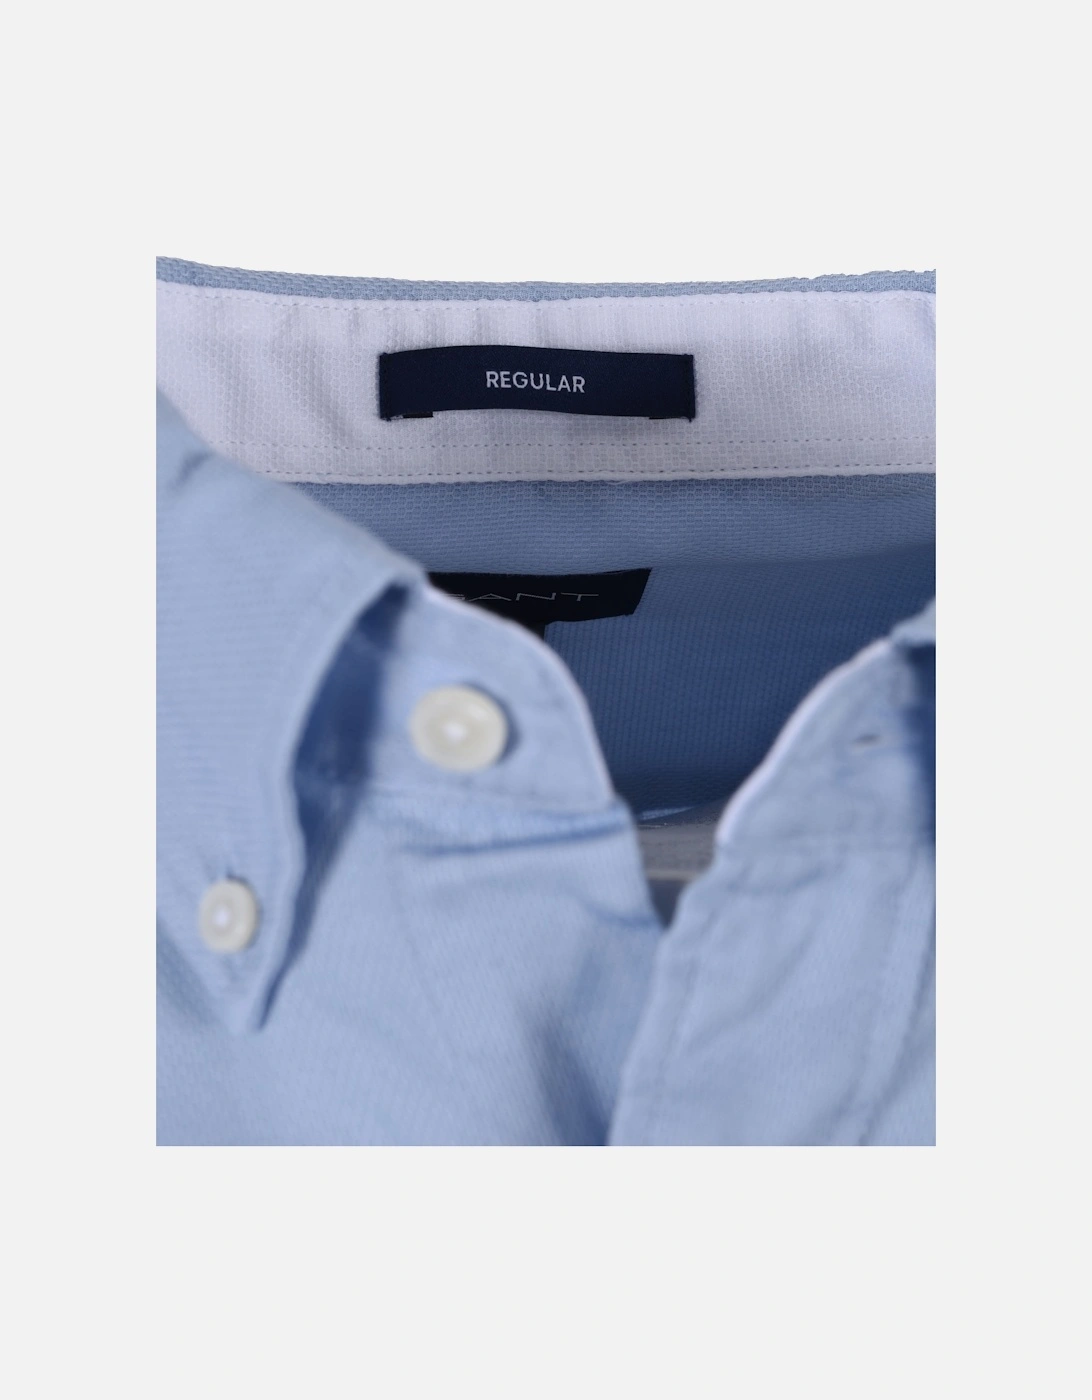 Honeycomb Texture Weave Long Sleeved Shirt Muted Blue